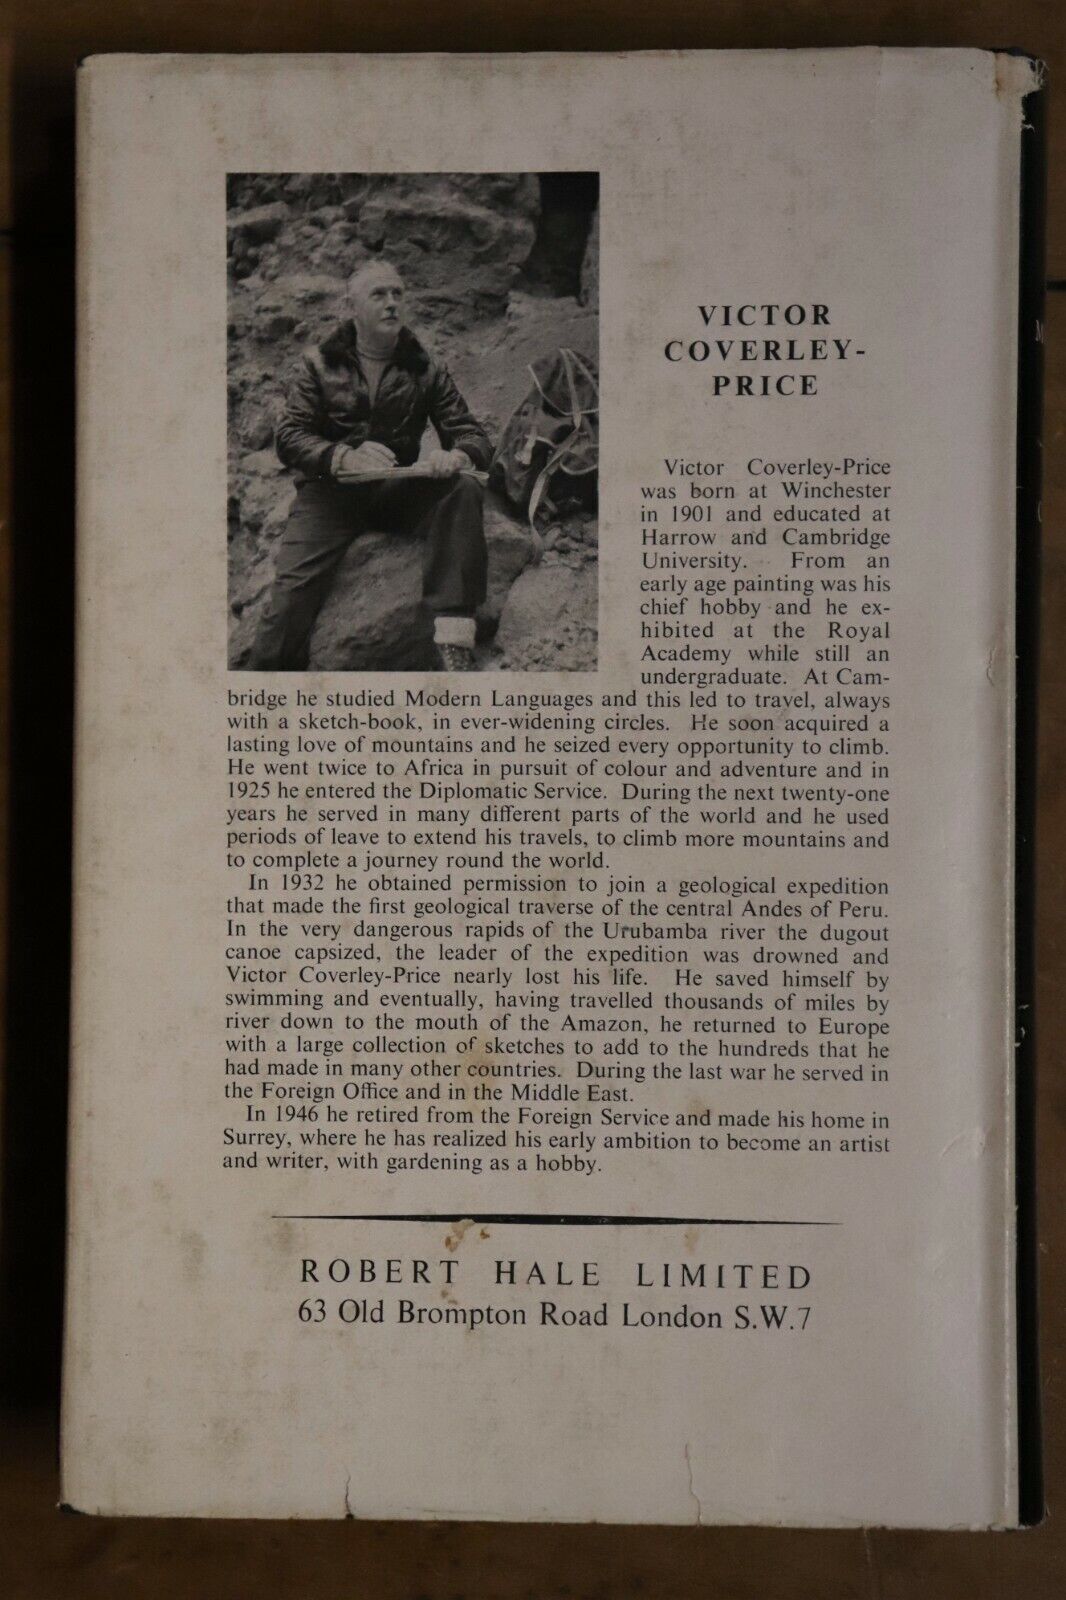 An Artist Among Mountains - 1957 - 1st Edition - English Artist